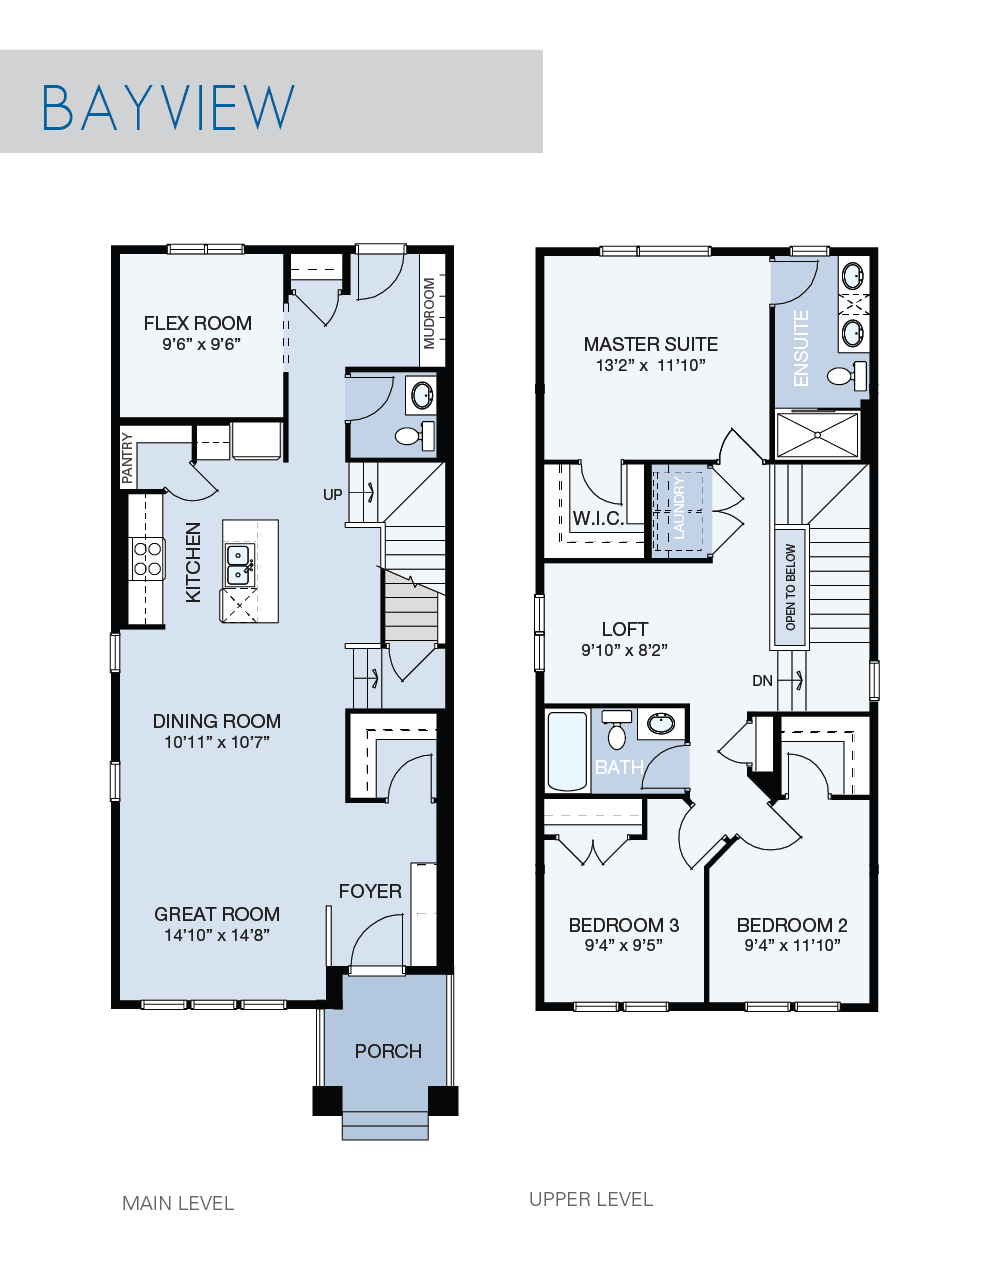 Bayview floorplan